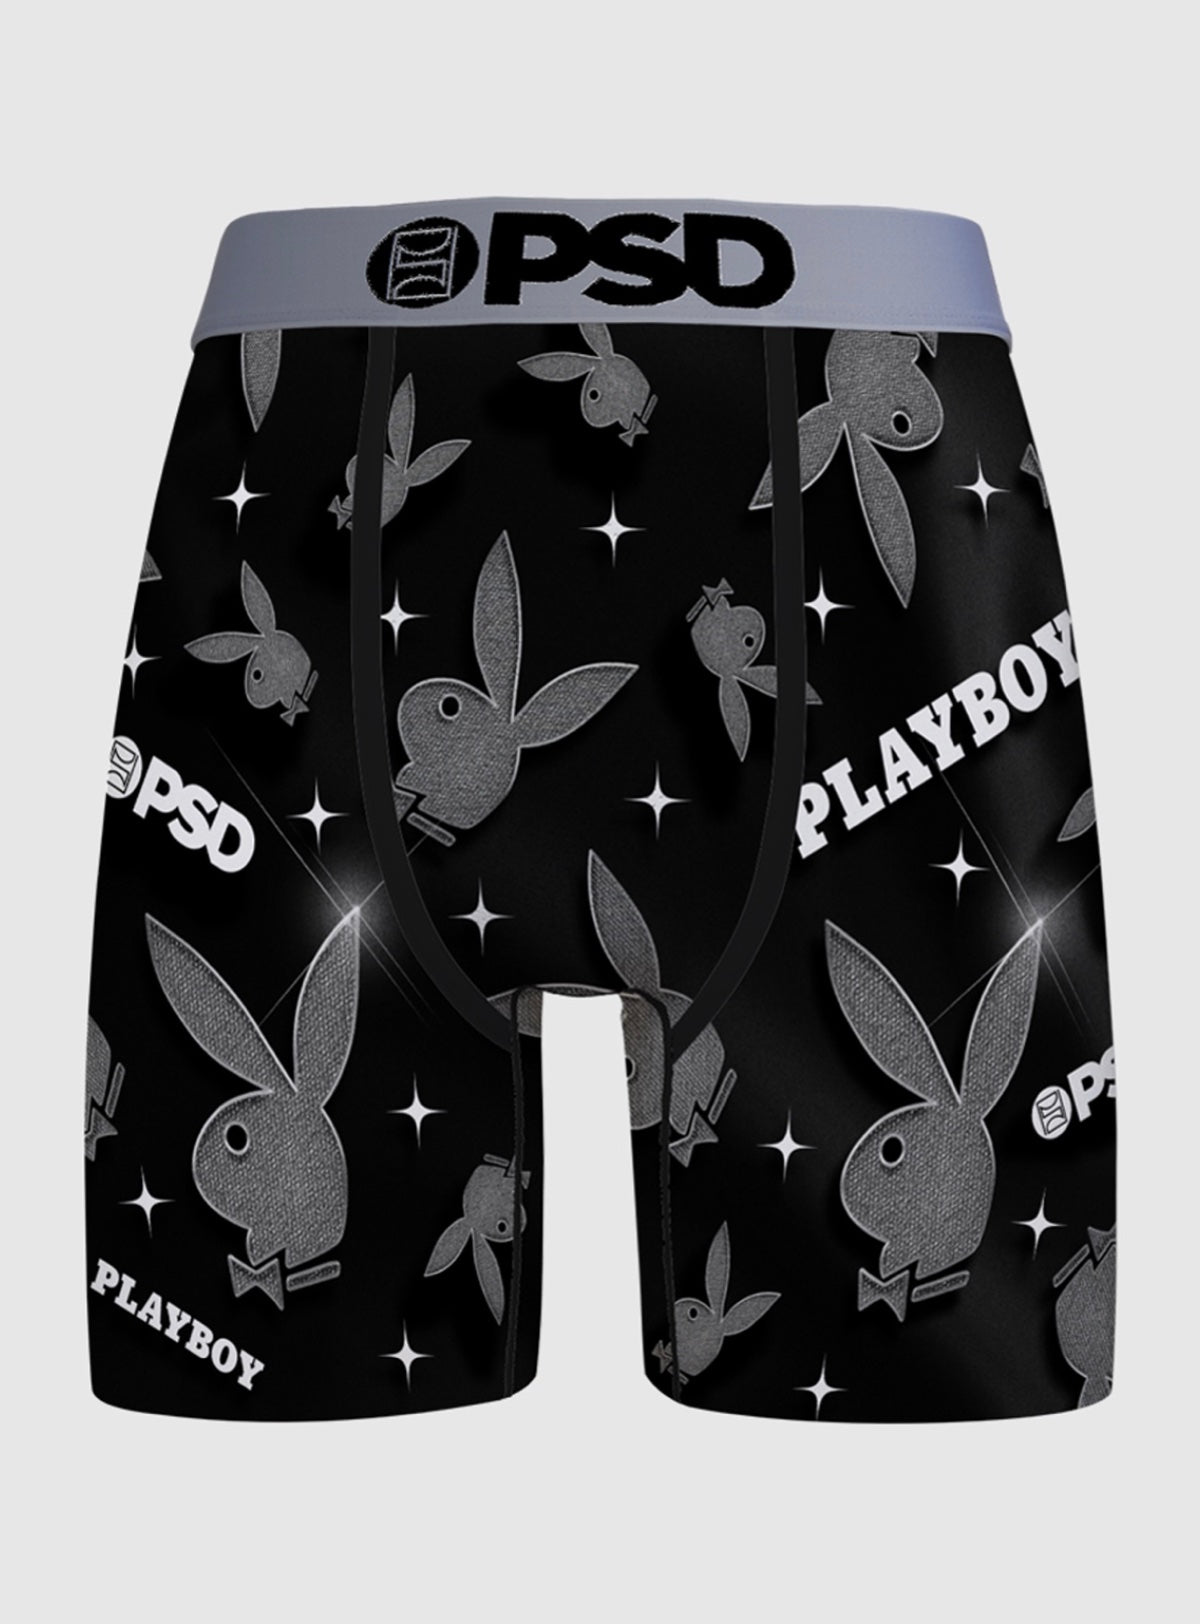 PSD Playboy Beach Club Stretch Boxer Briefs - Men's Boxers in Multi